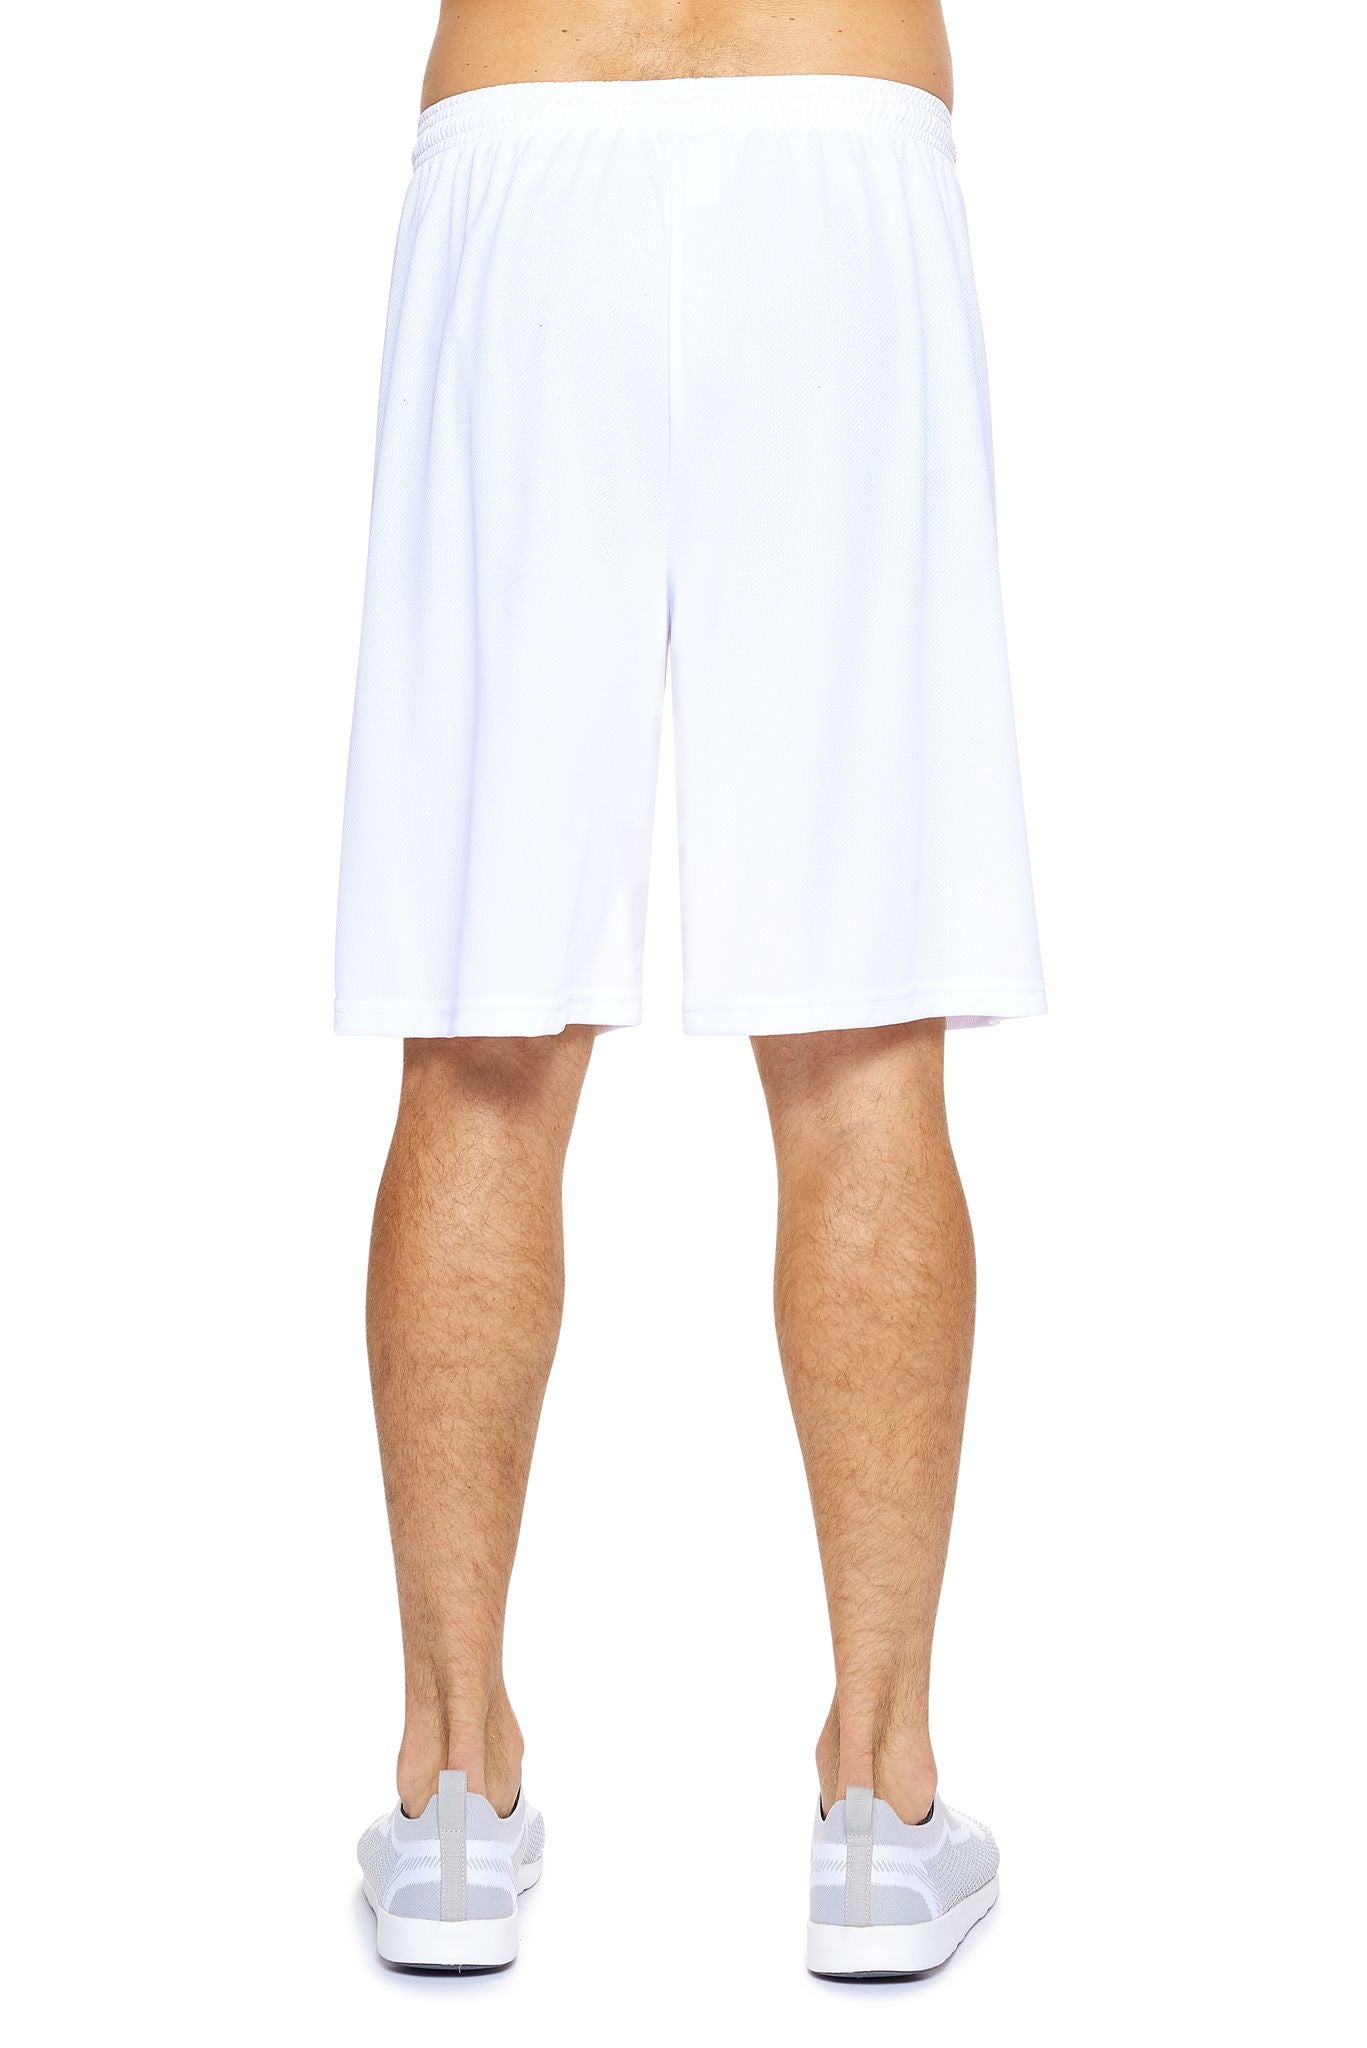 Expert Brand Men's Oxymesh™ Training Shorts in White Image 3#white